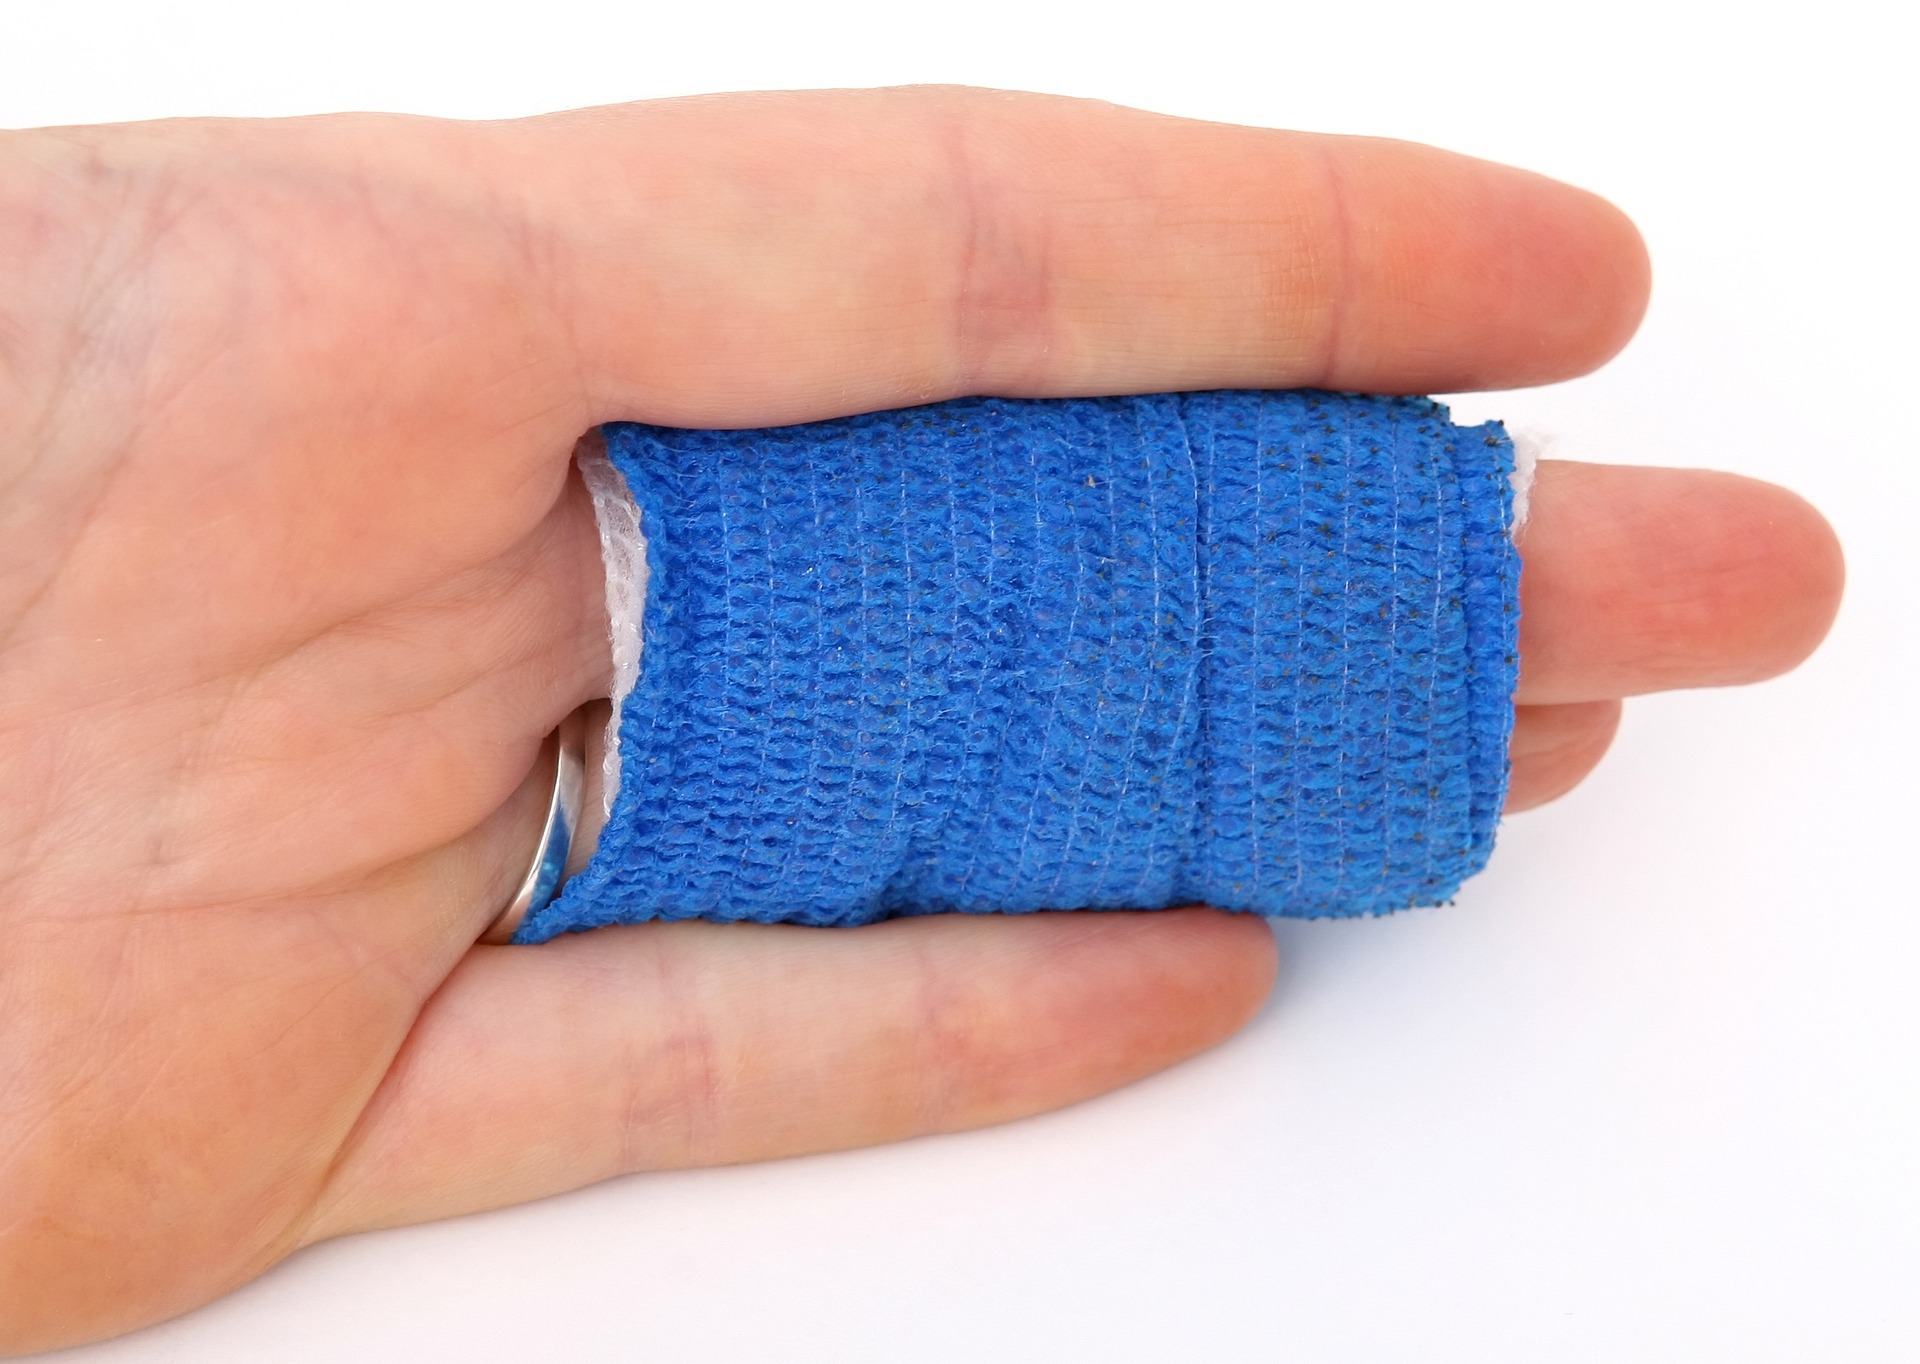 Negligence caused broken finger accident